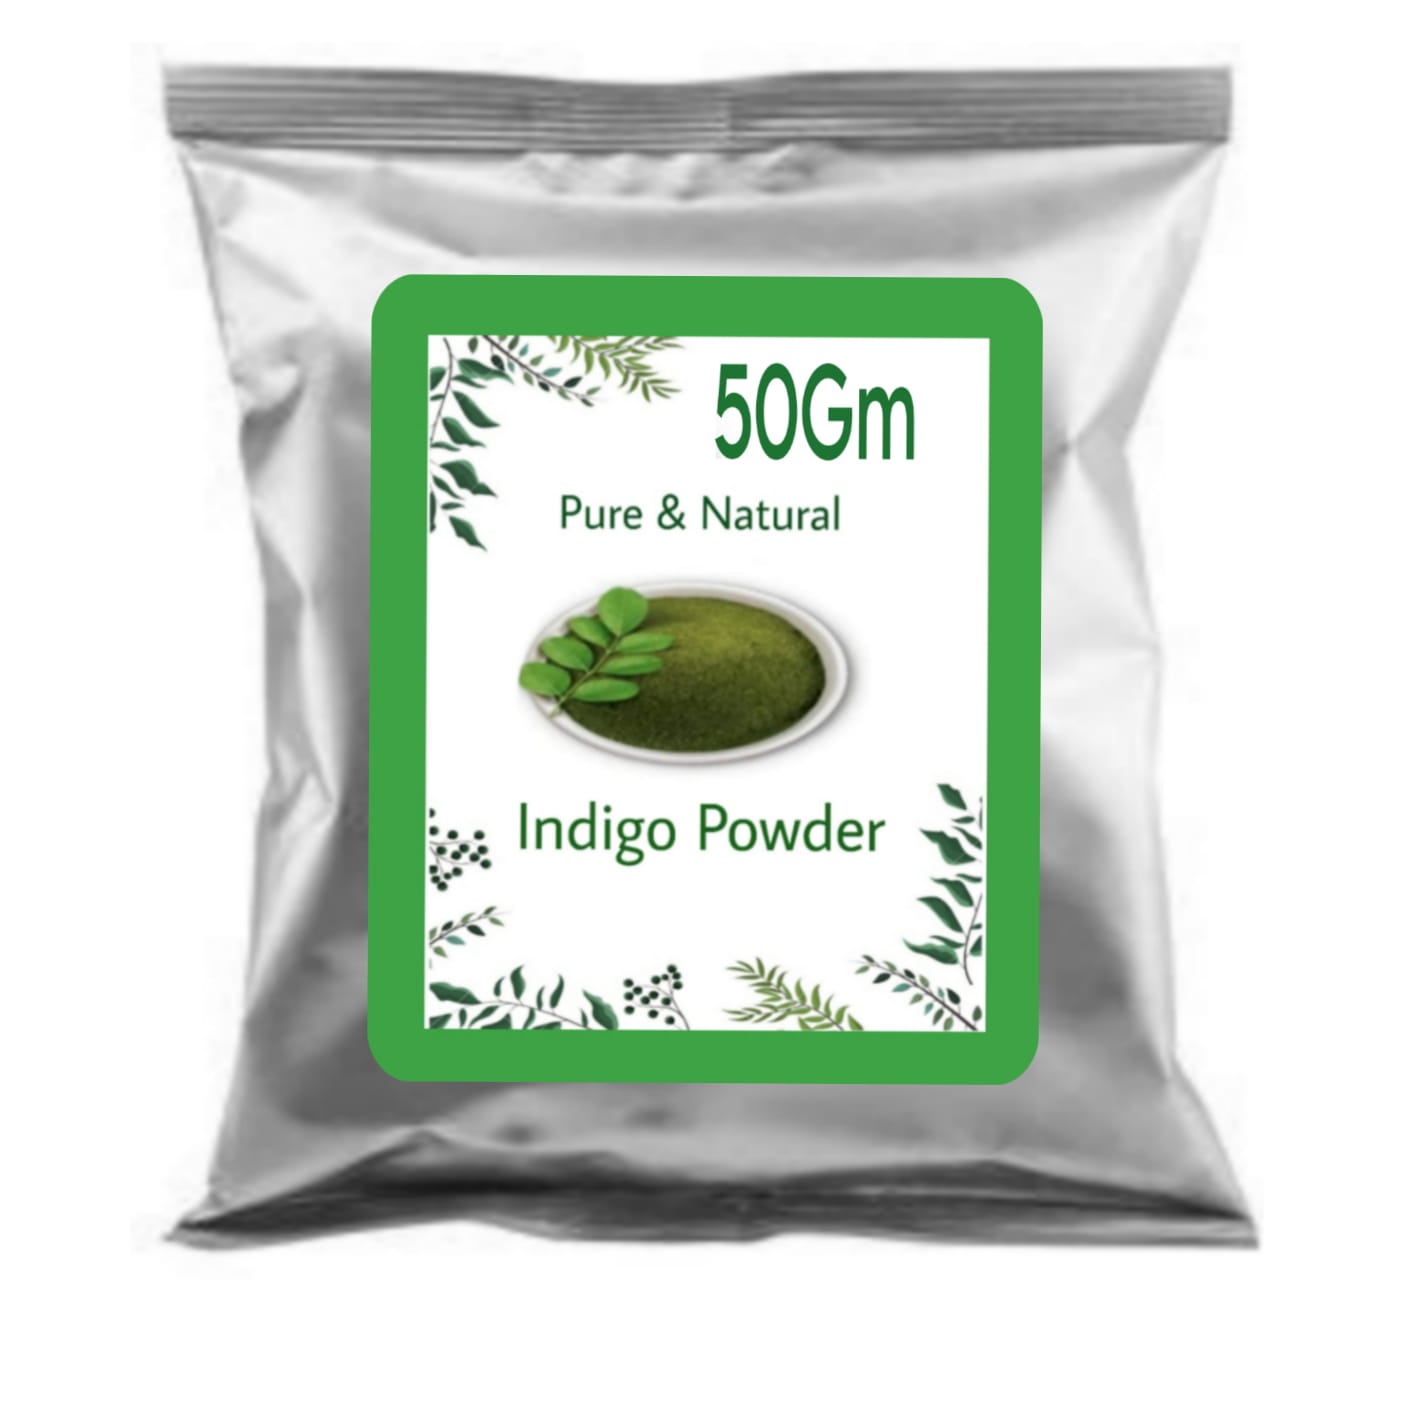 SDF INDIA Indigo Powder (Indigofera Tinctoria) Organic For Hair Pure Neel Powder For Natural Hair Colorant Black/Brown Hair & Beard Dye/Color (50Gm)